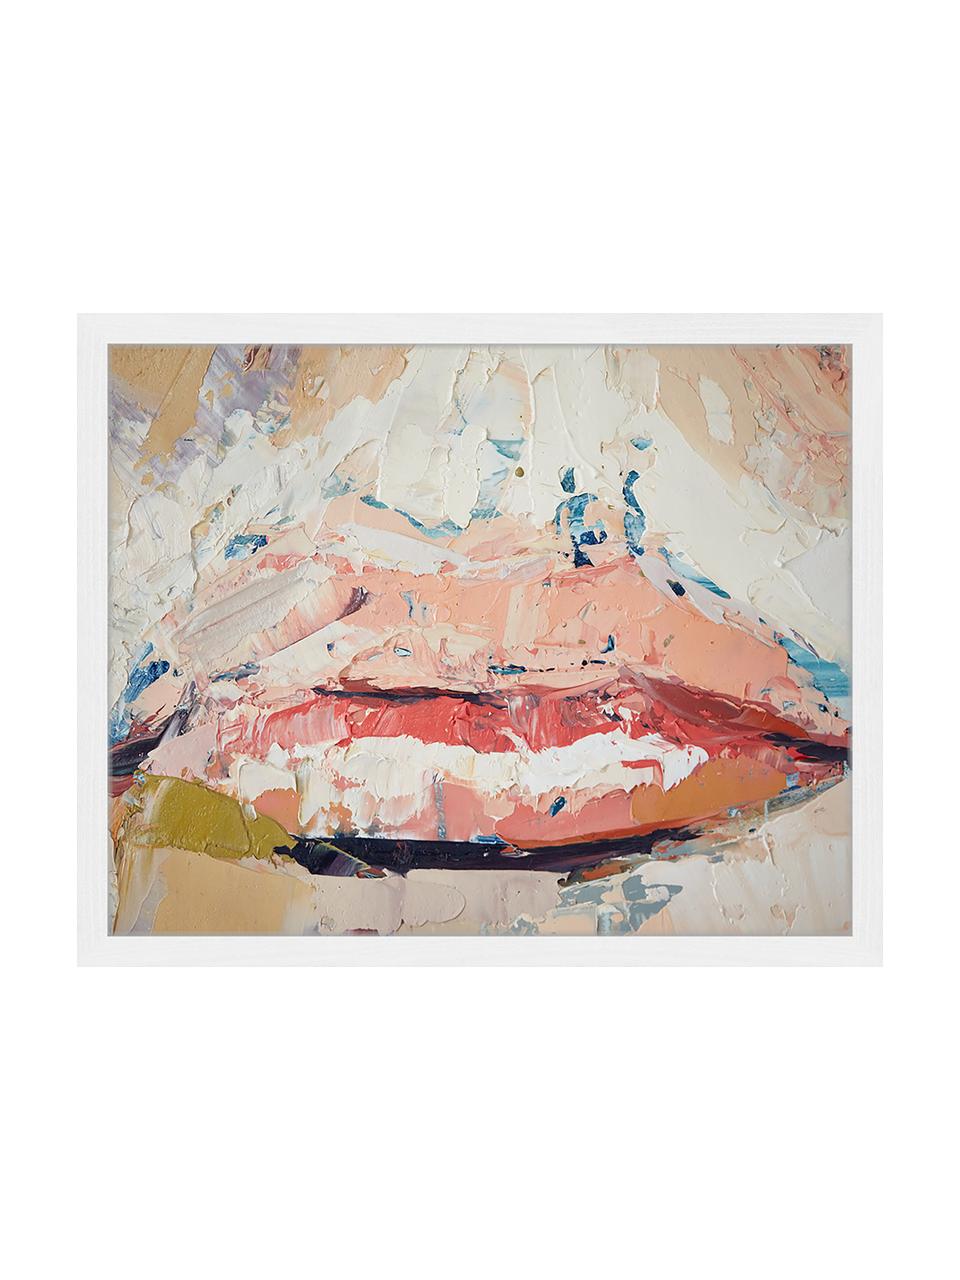 Gerahmter Digitaldruck Kiss Me, Bild: Digitaldruck auf Papier, , Rahmen: Holz, lackiert, Front: Plexiglas, Mehrfarbig, 53 x 43 cm